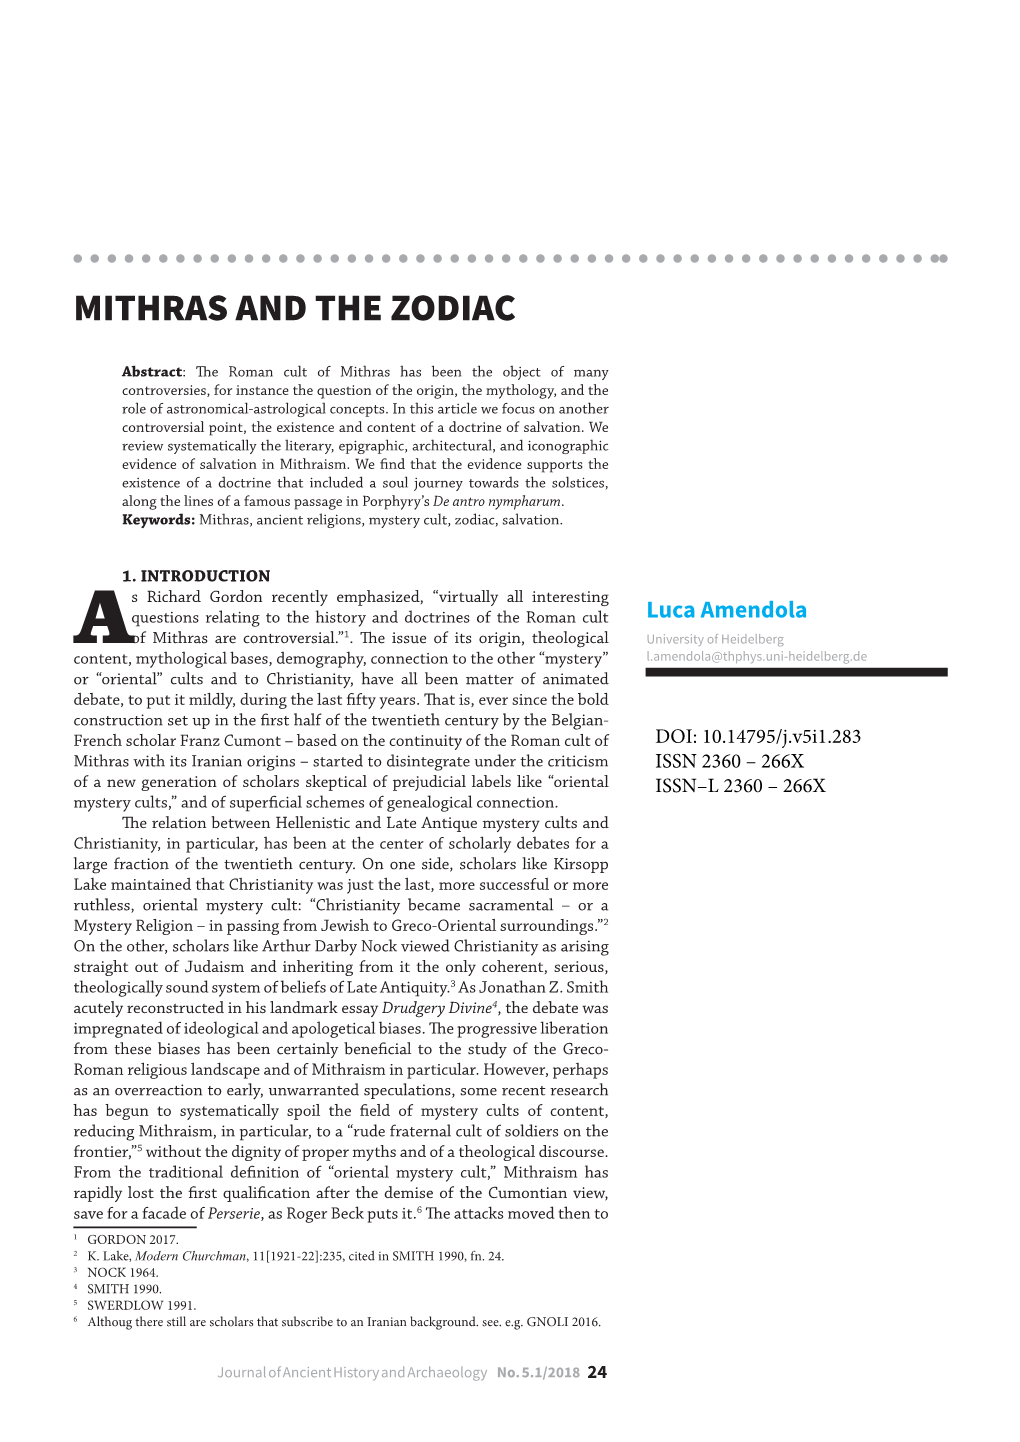 Mithras and the Zodiac